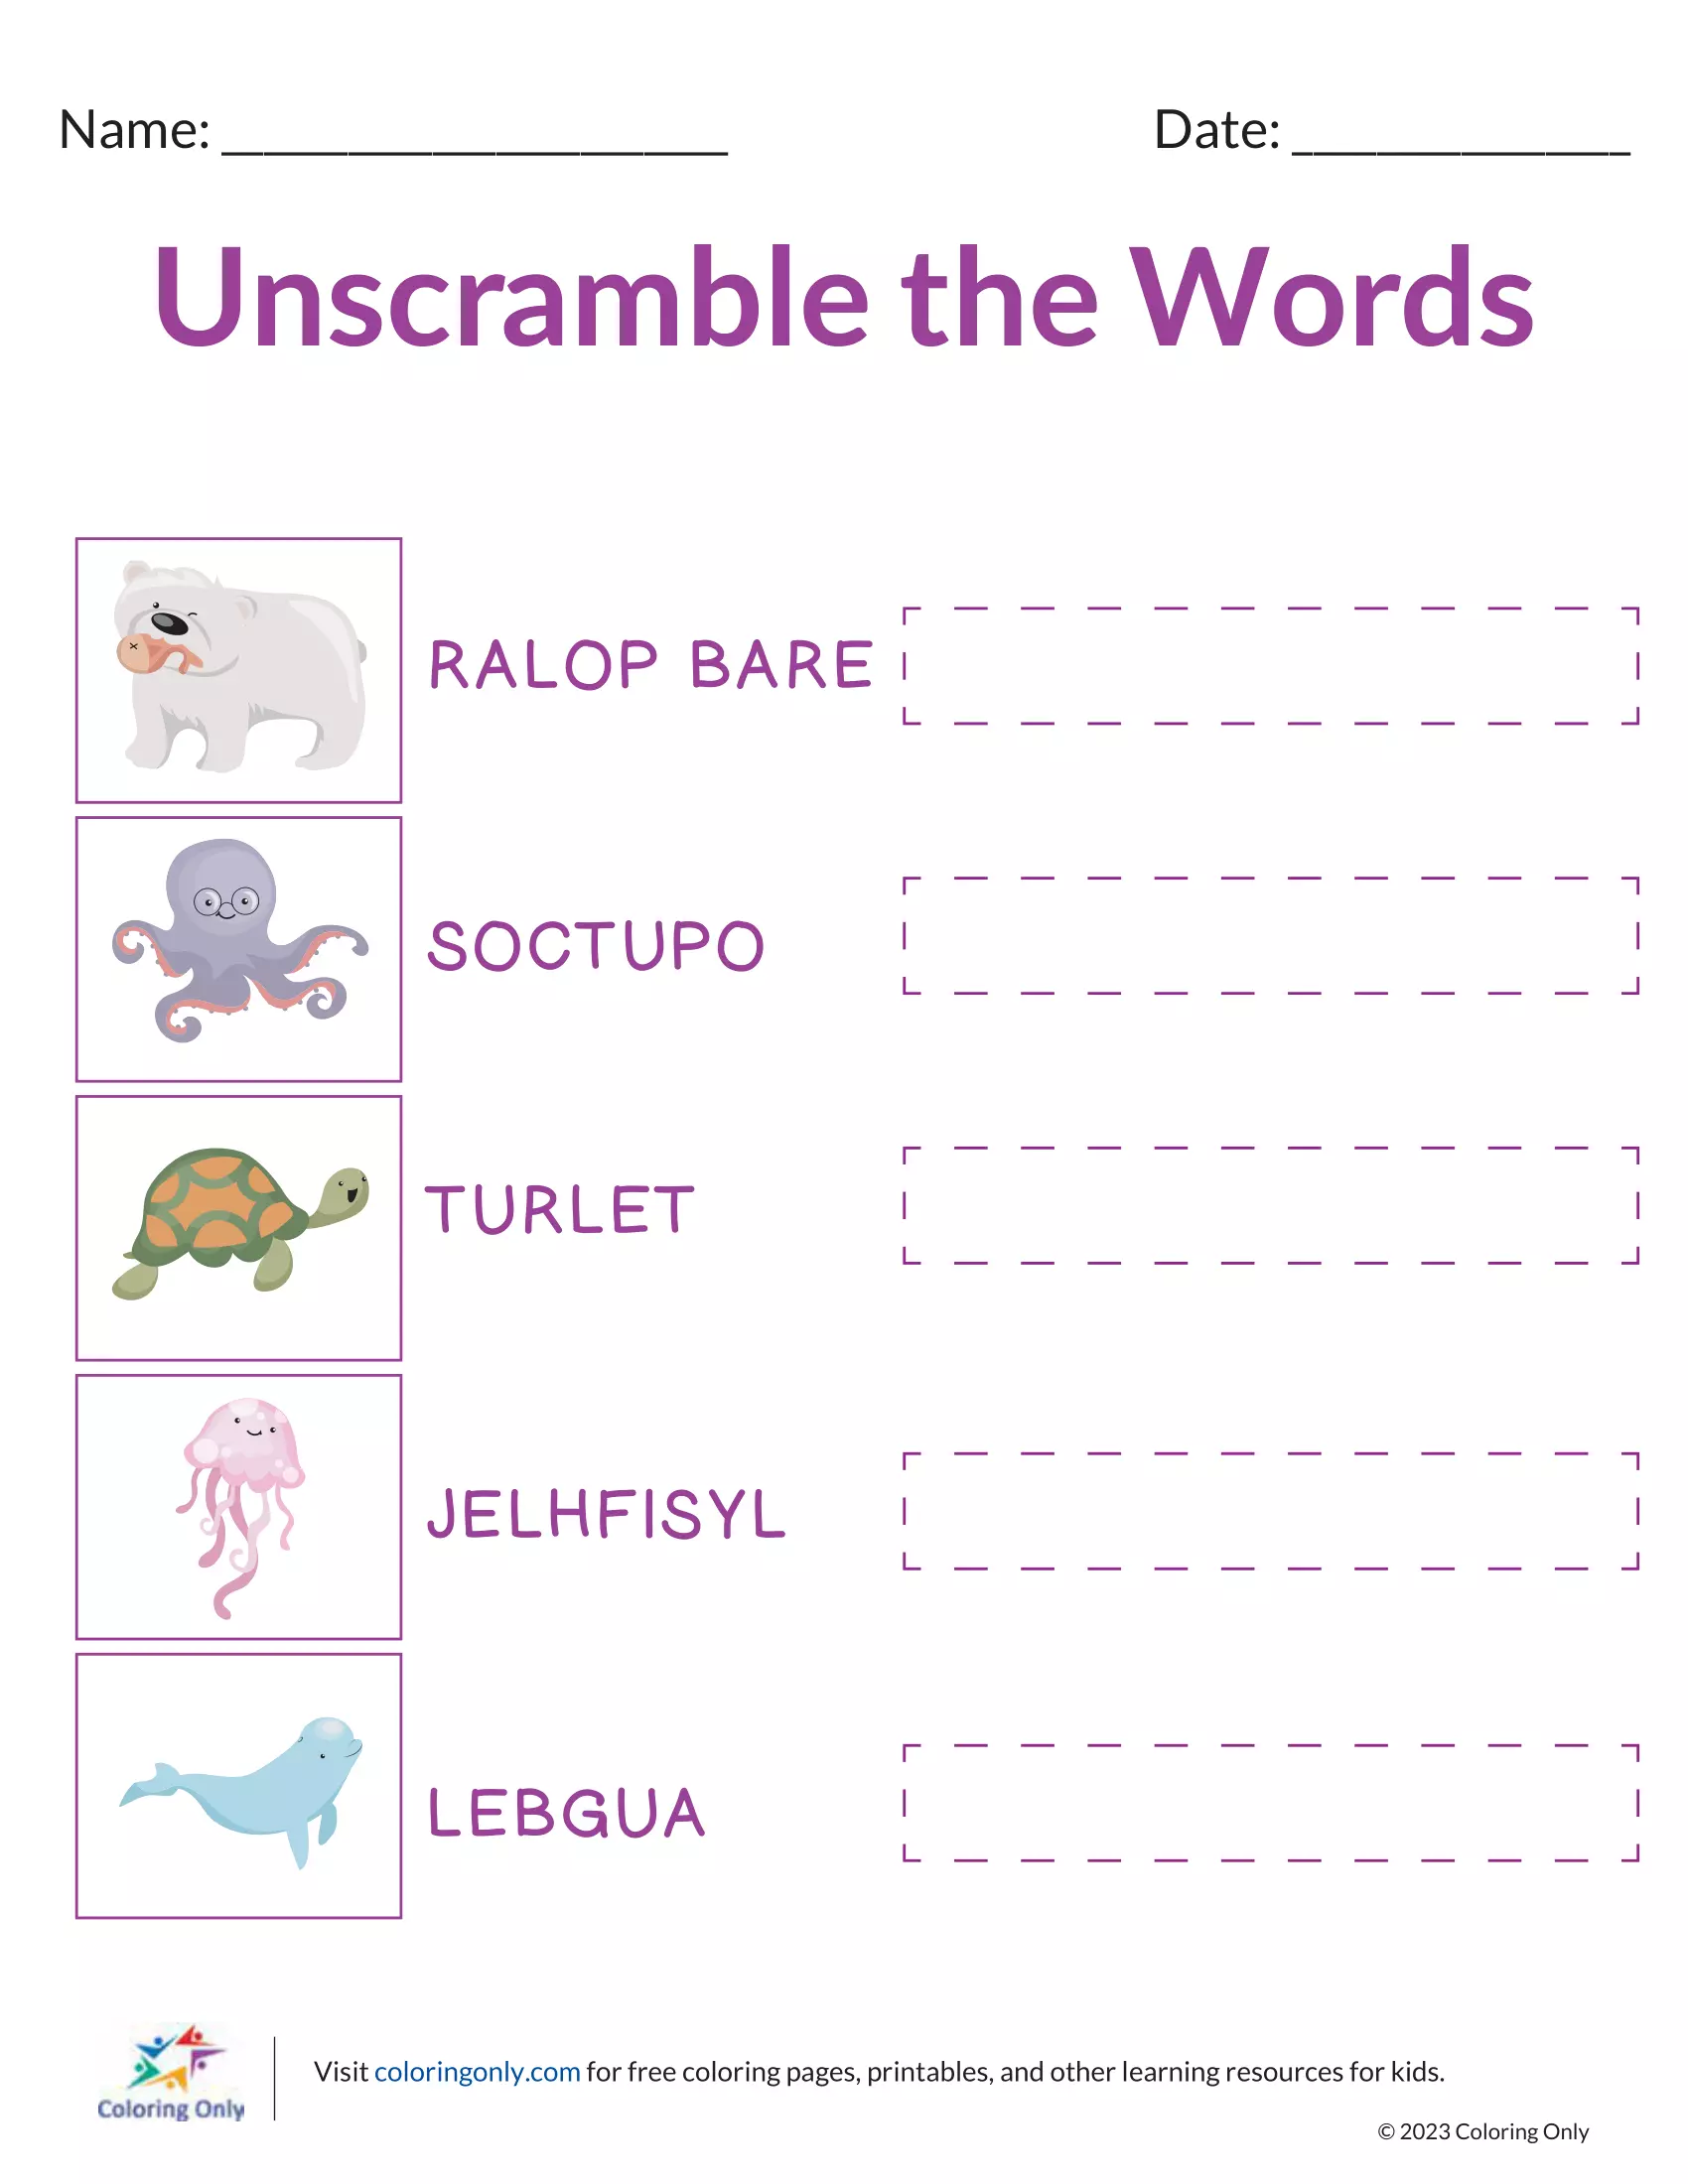 Unscramble the Words Free Printable Worksheet